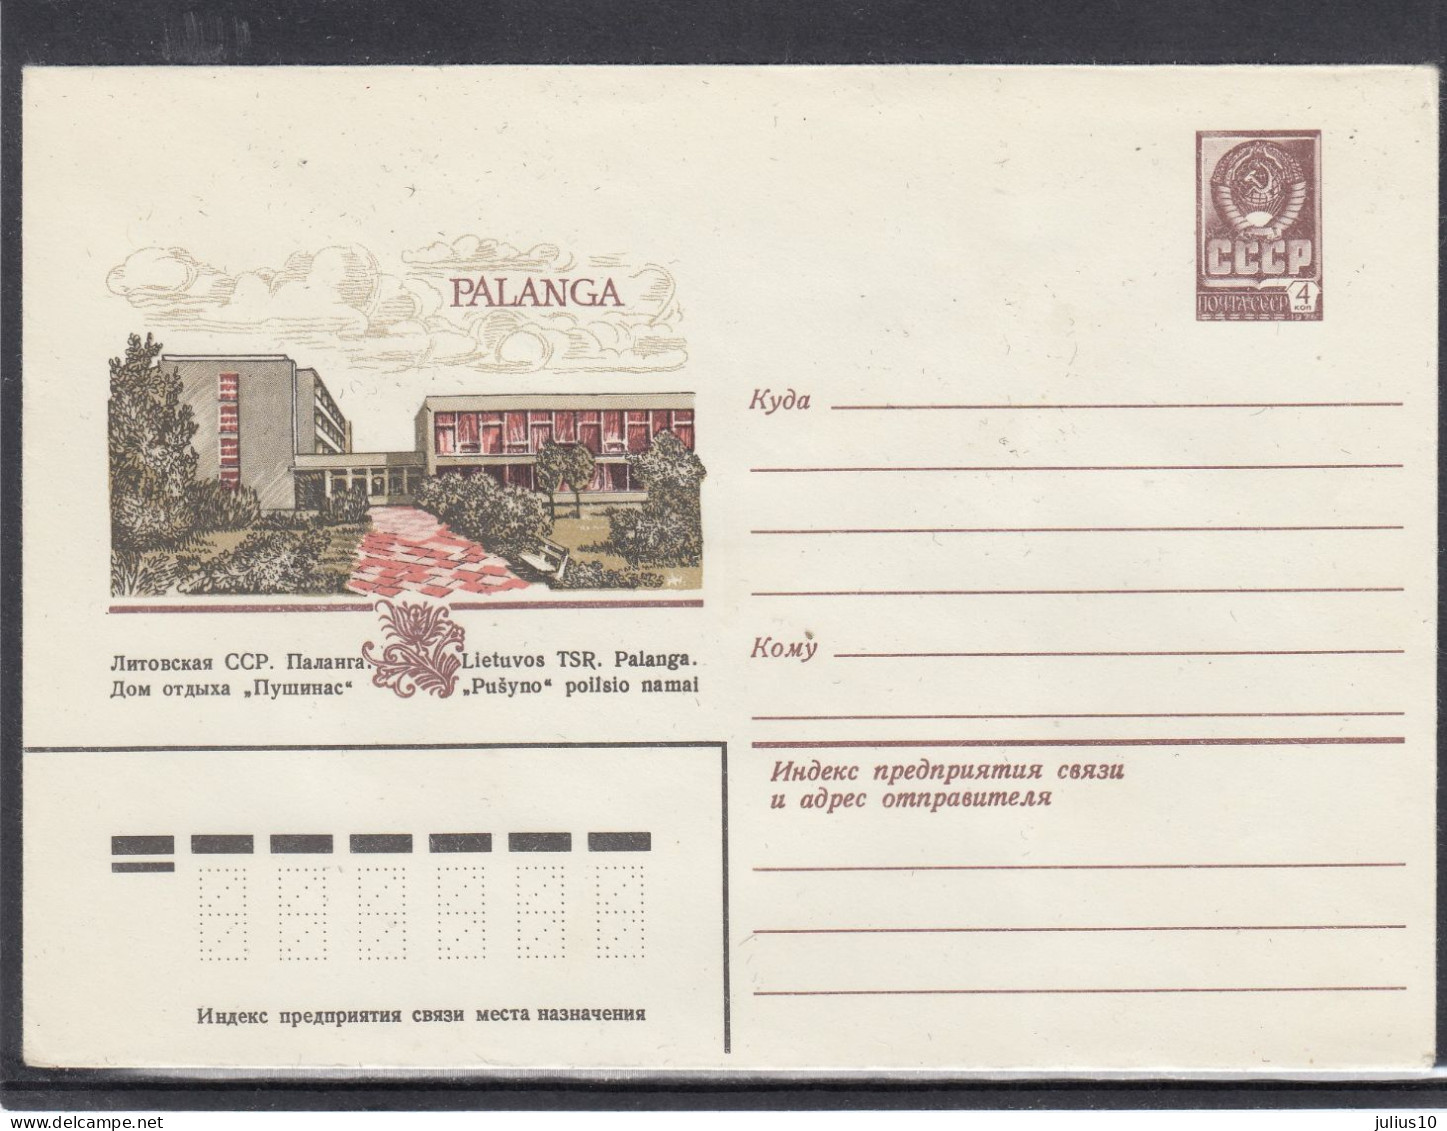 LITHUANIA (USSR) 1980 Cover Palanga Rest House #LTV119 - Lithuania